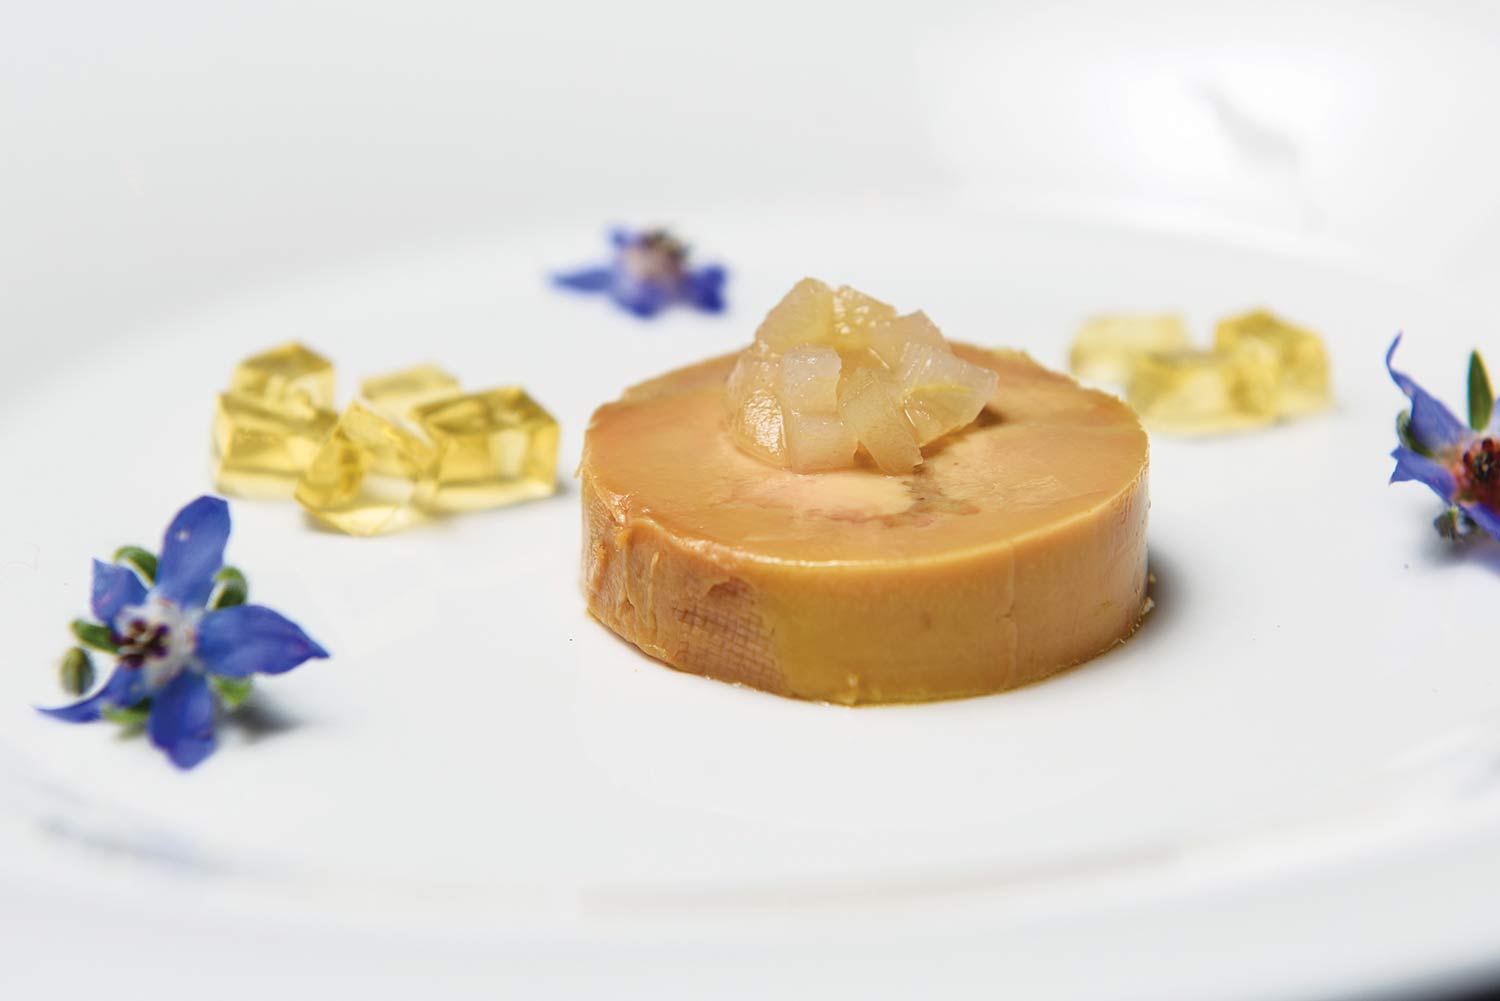 Douguet’s signature foie gras dish served at Gotham